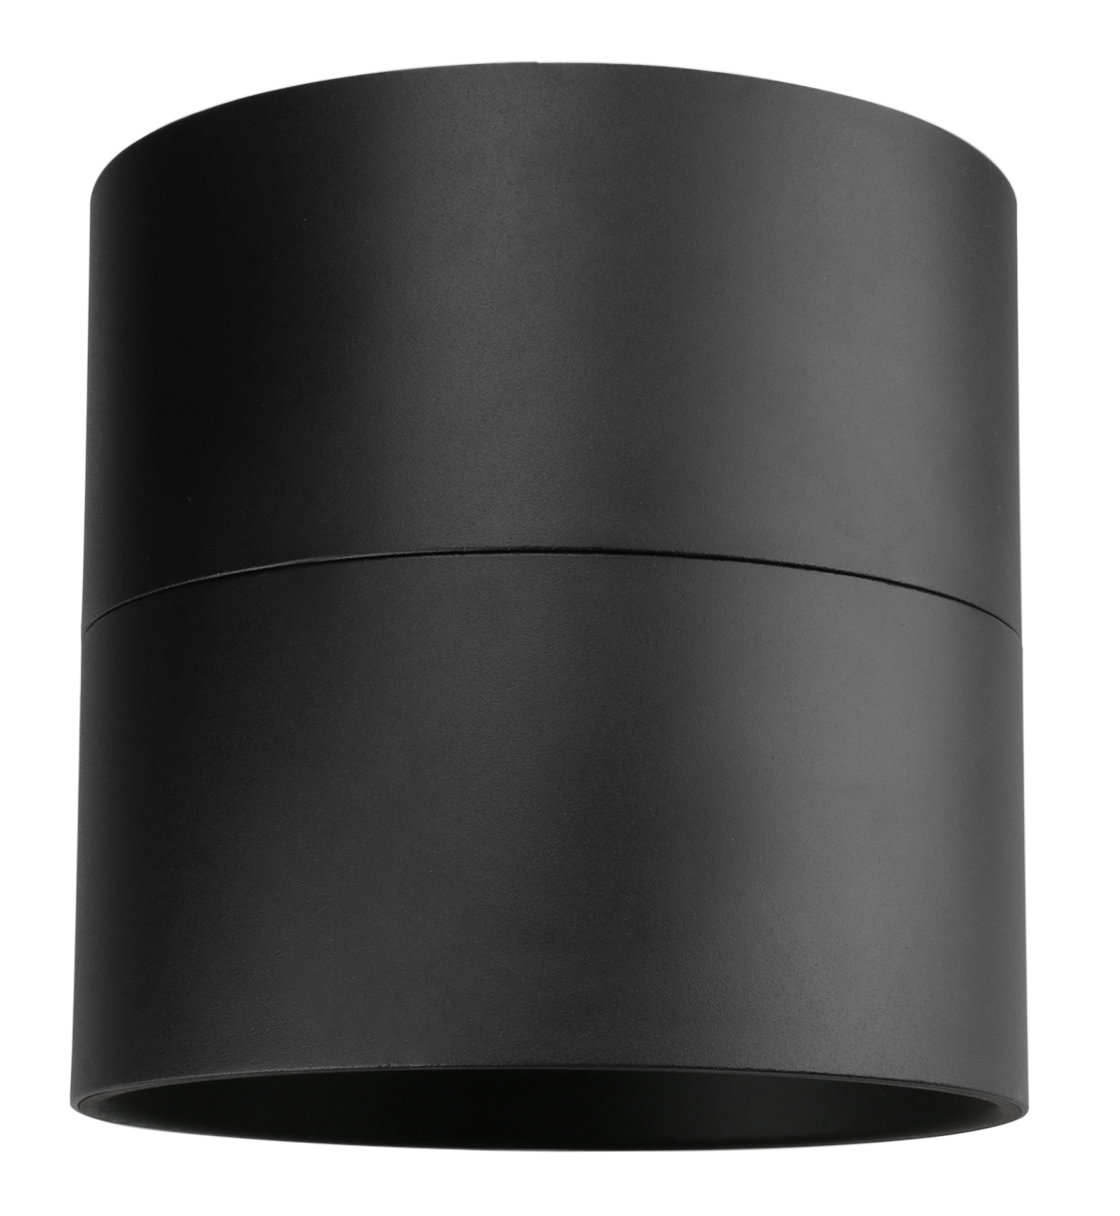 Cylinder Pendant Light Fixture, 4 Inch, Black